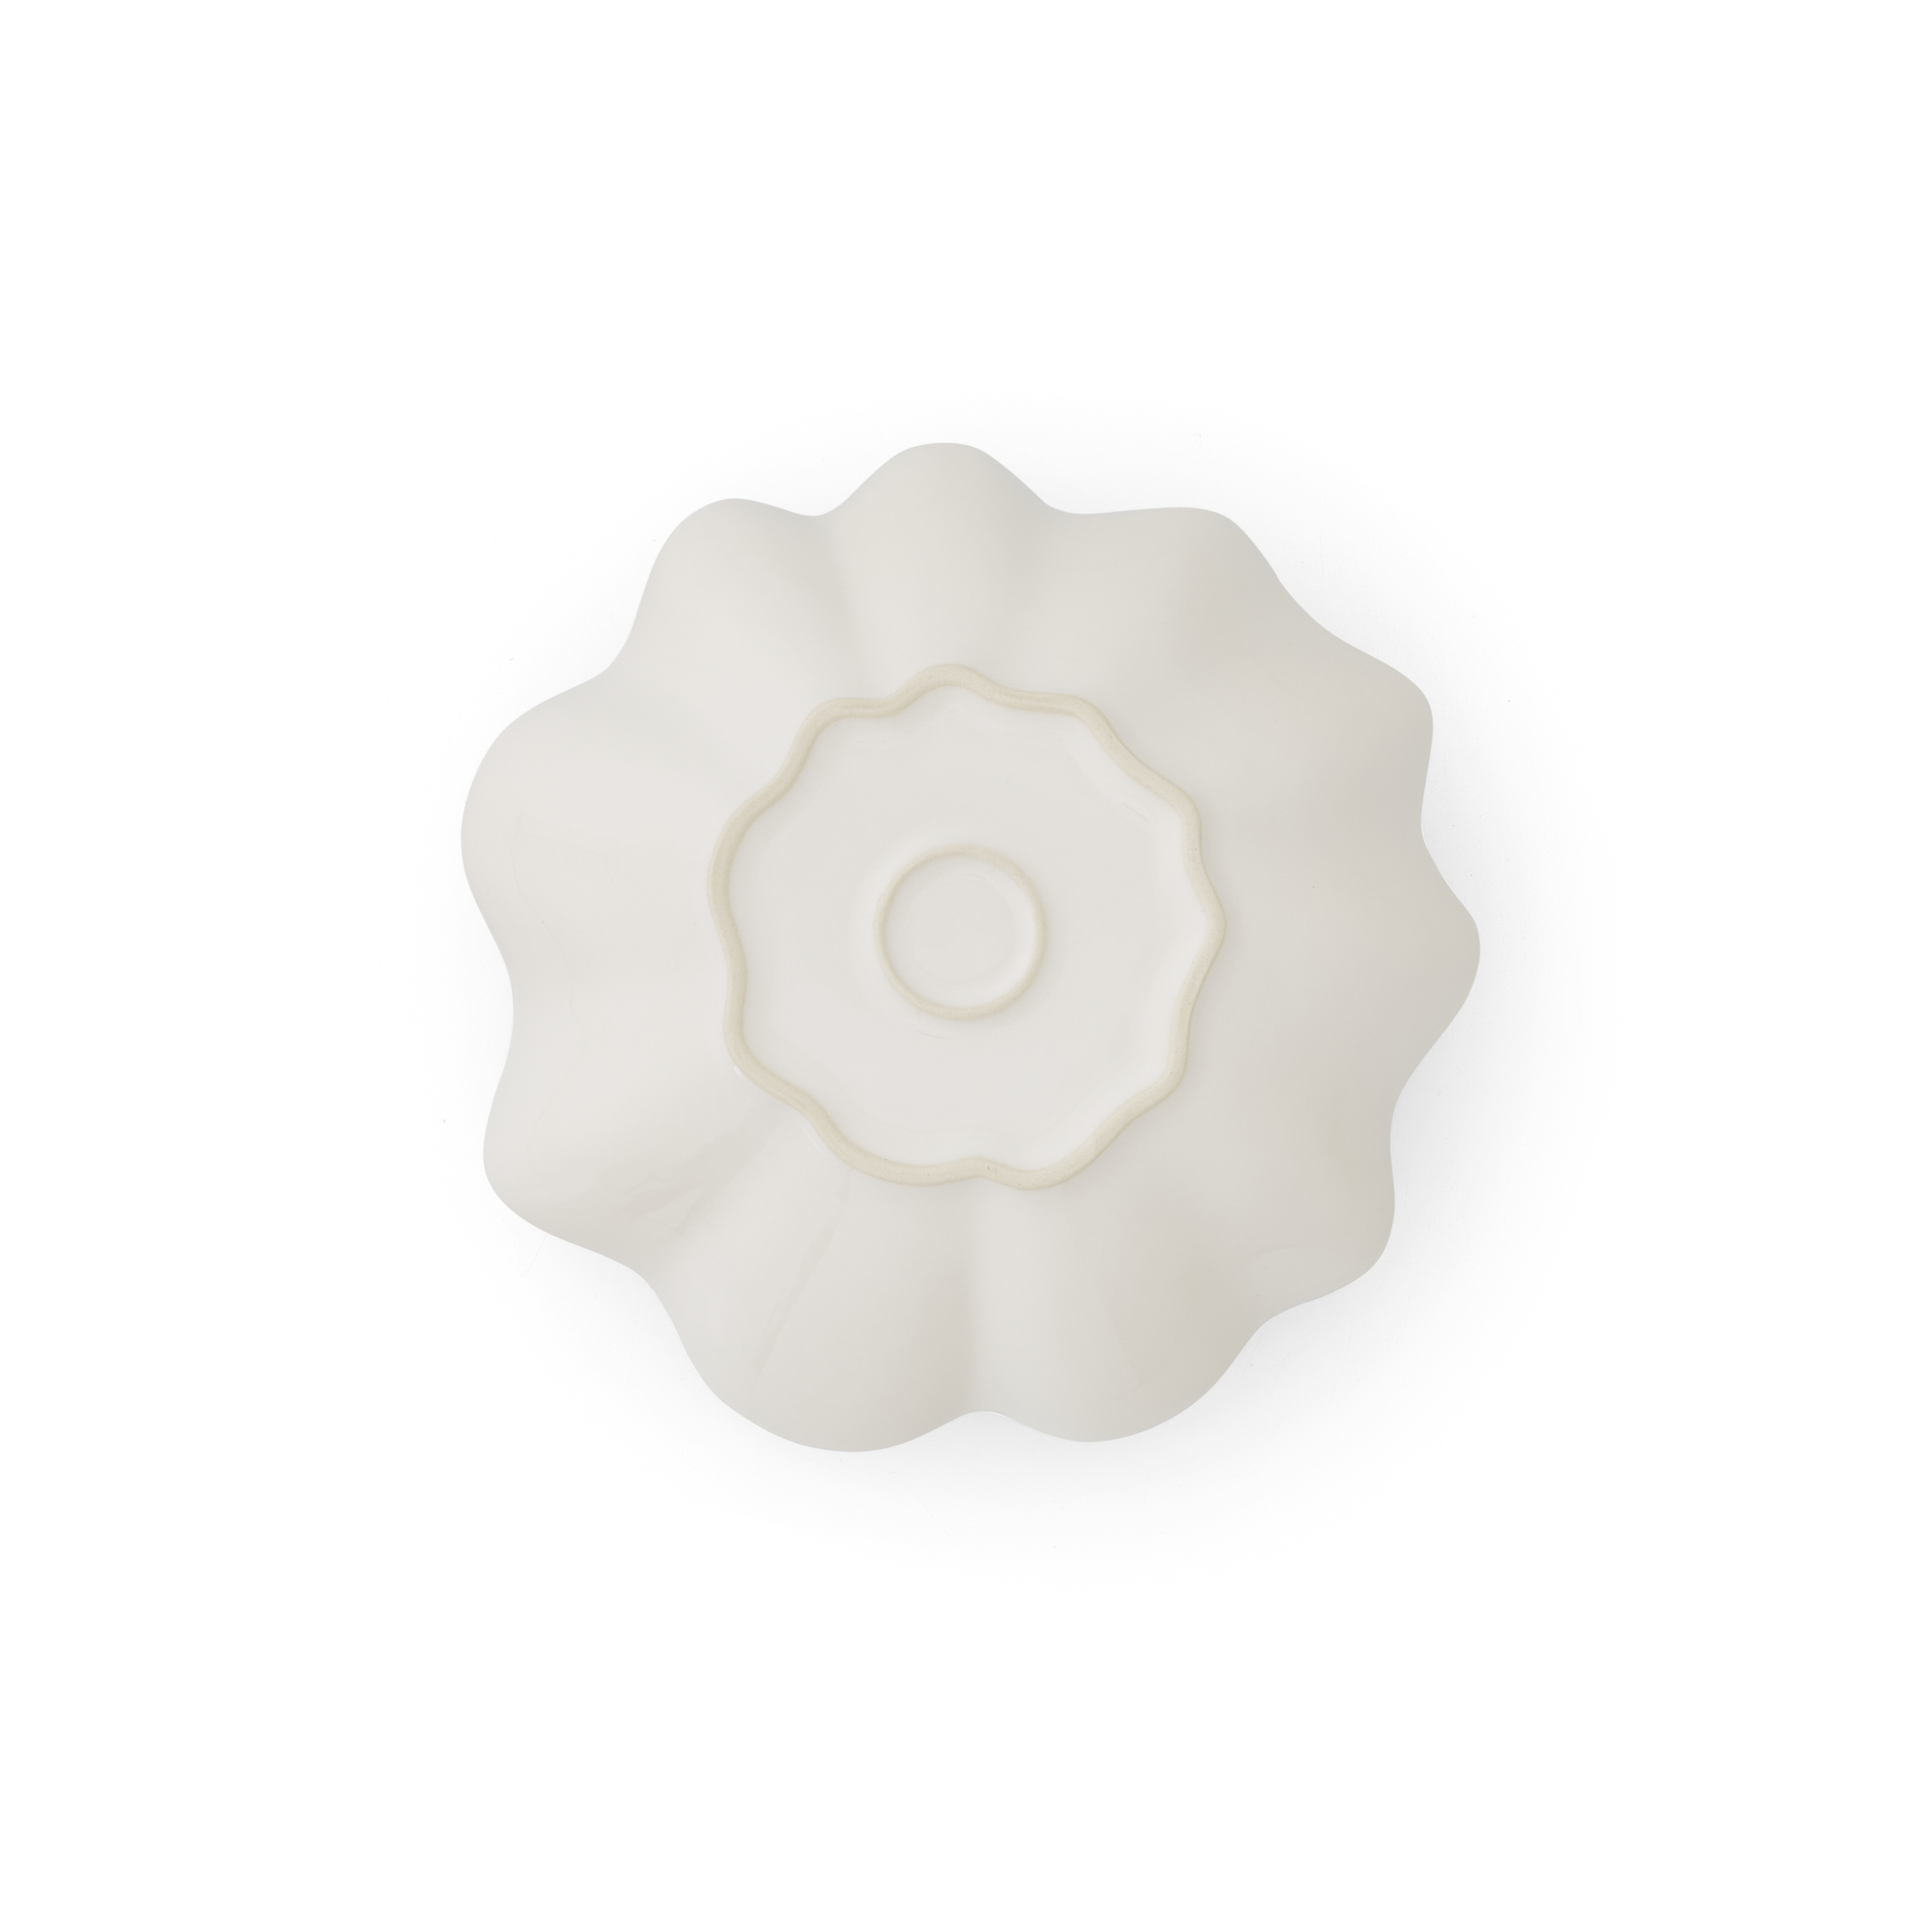 Sophie Conran Floret 9" Pasta Bowl-Creamy White image number null